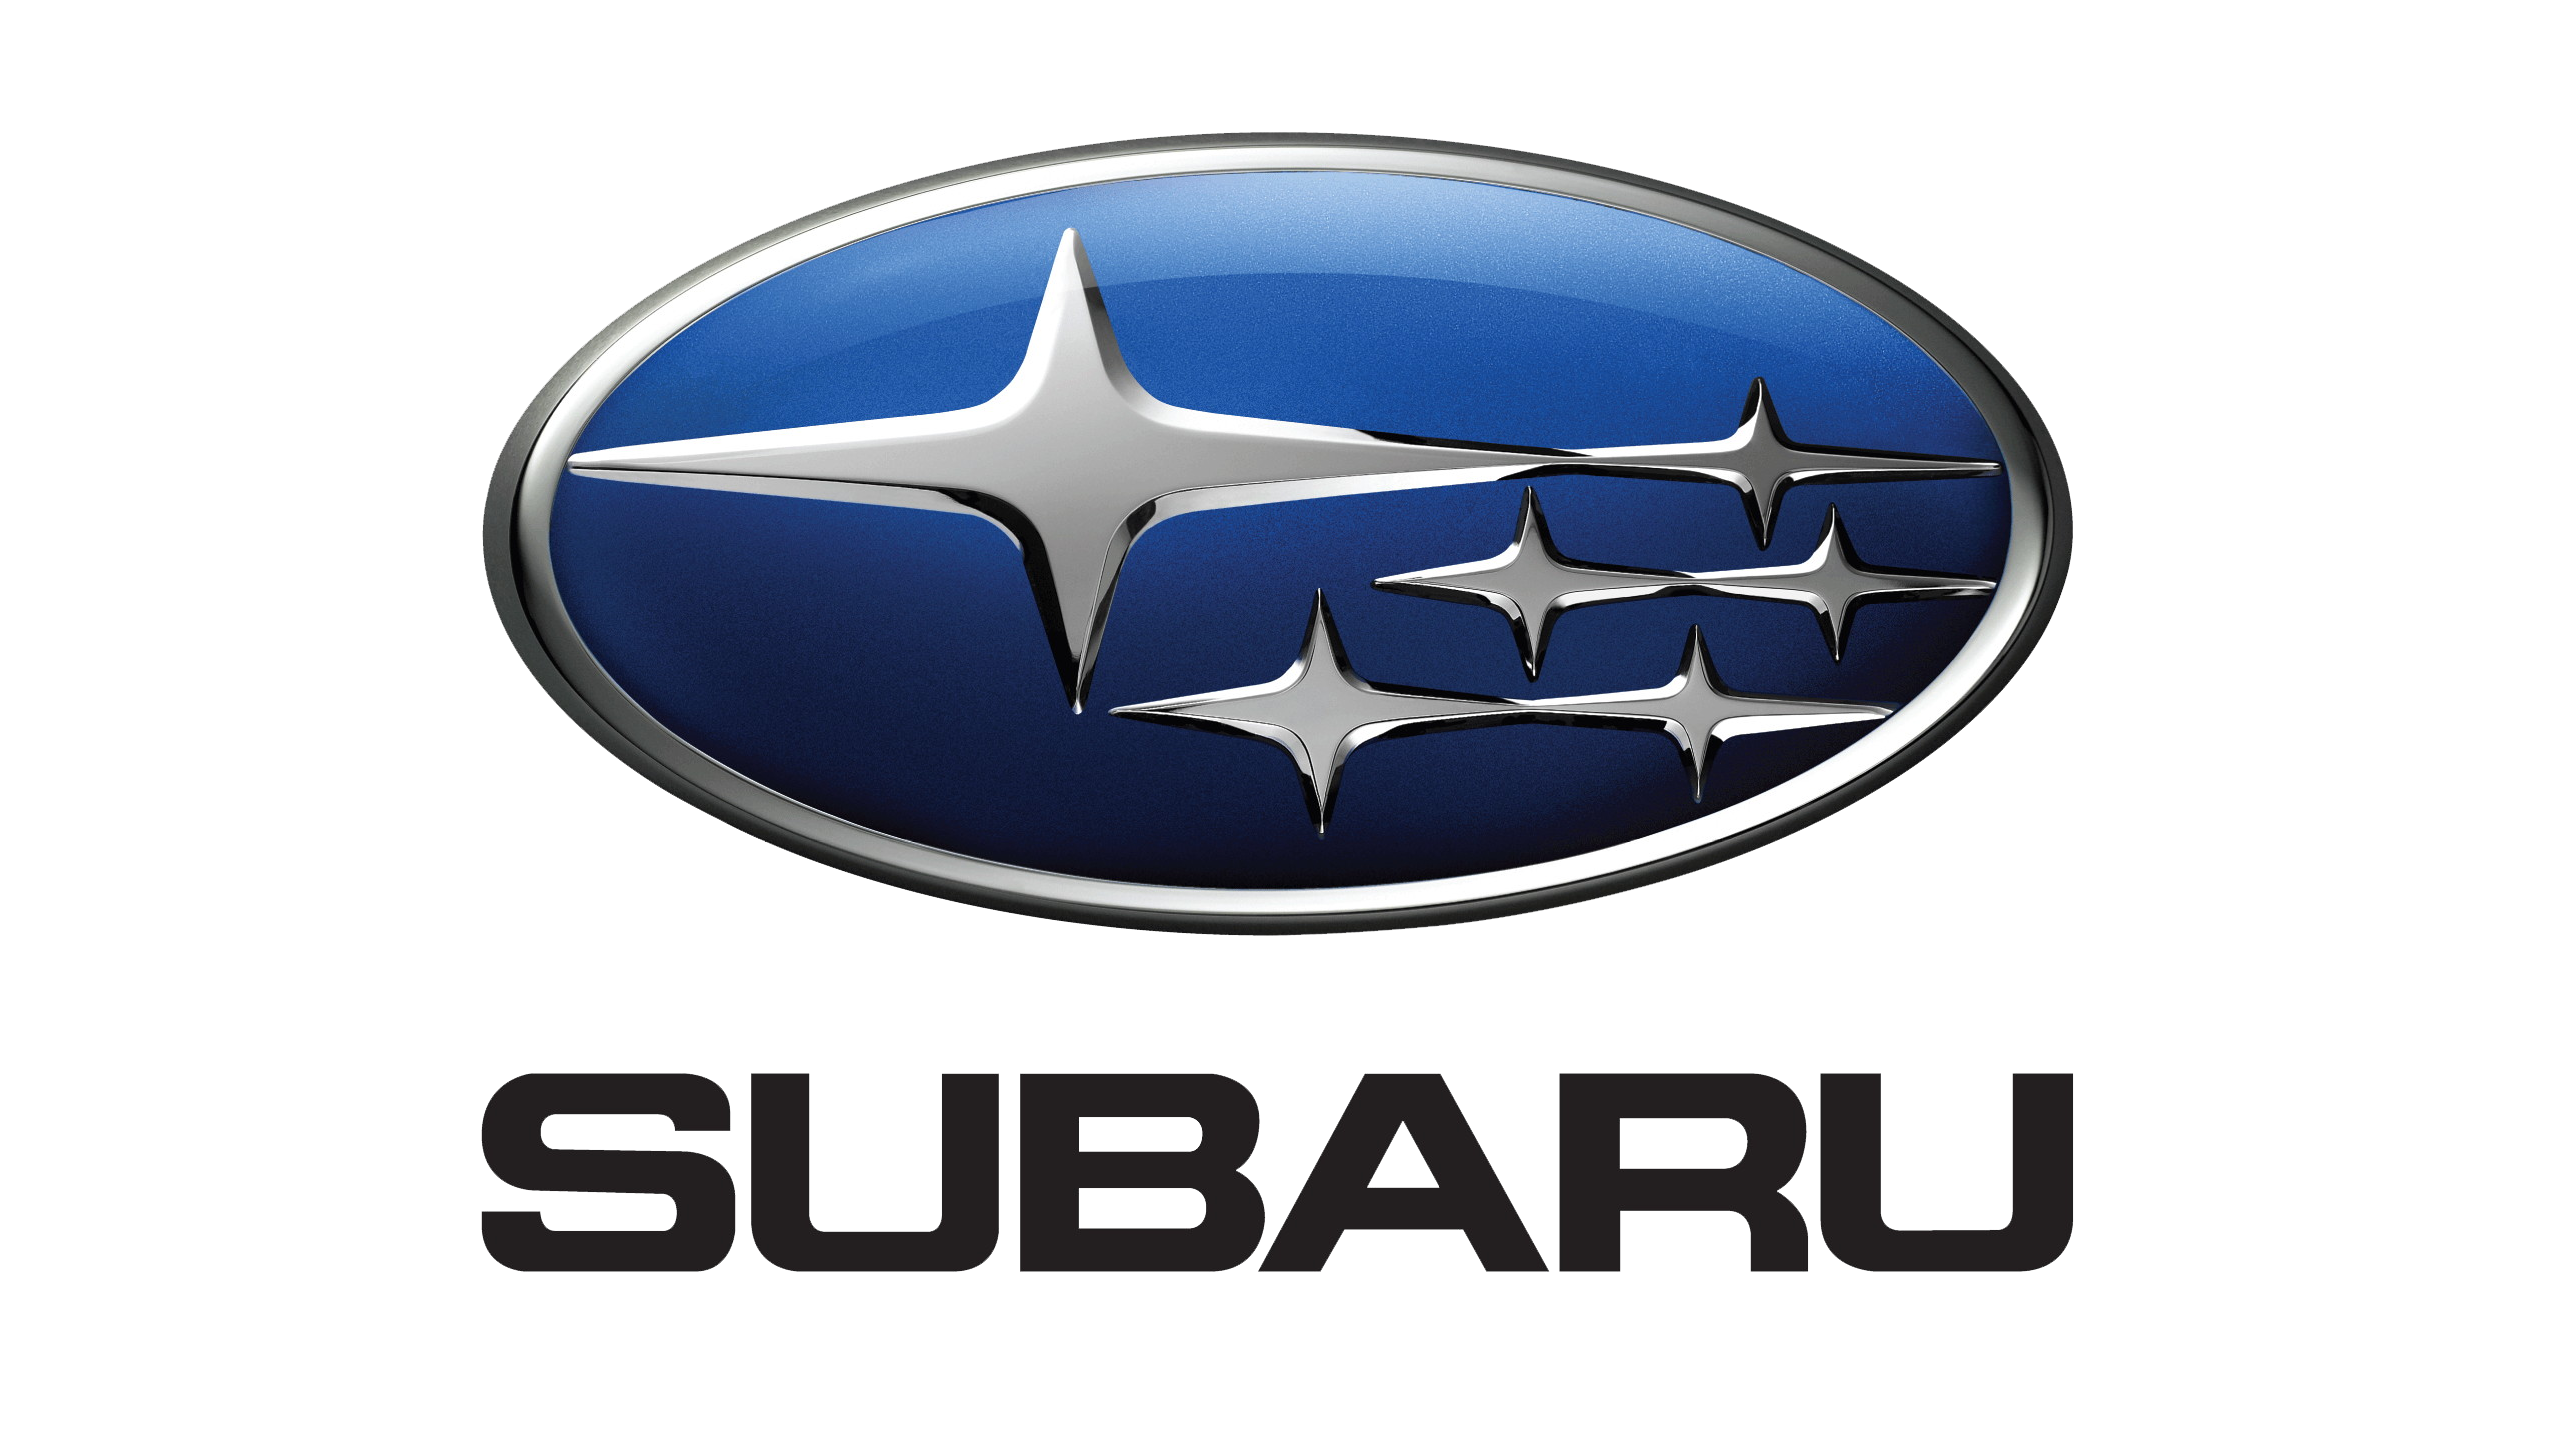 Subaru Hd Logo Png File - Subaru, Transparent background PNG HD thumbnail